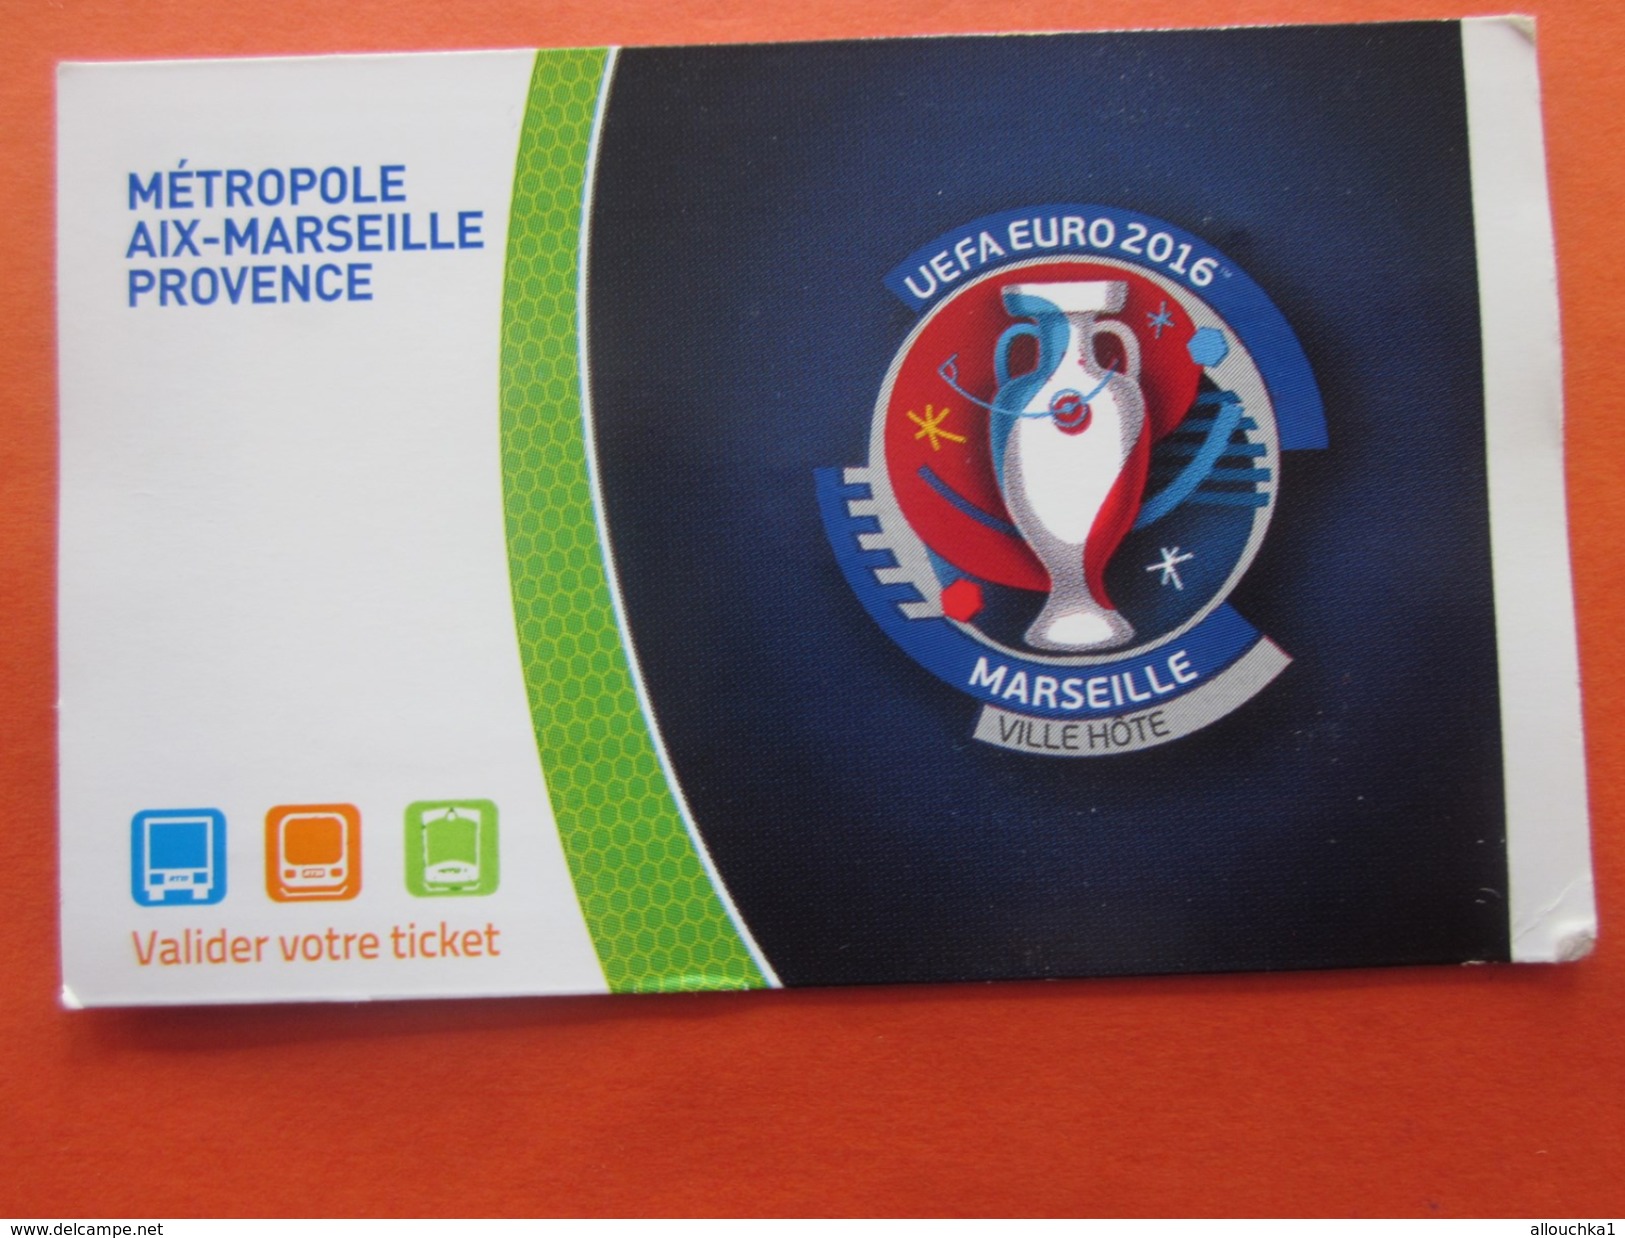 Titre Transport 2 Voyages  Jumelé Av Ticket Entrée Au Stadium UEFA Euro 2016 Football Marseille Ville Hôte>Métro >Europe - Europa